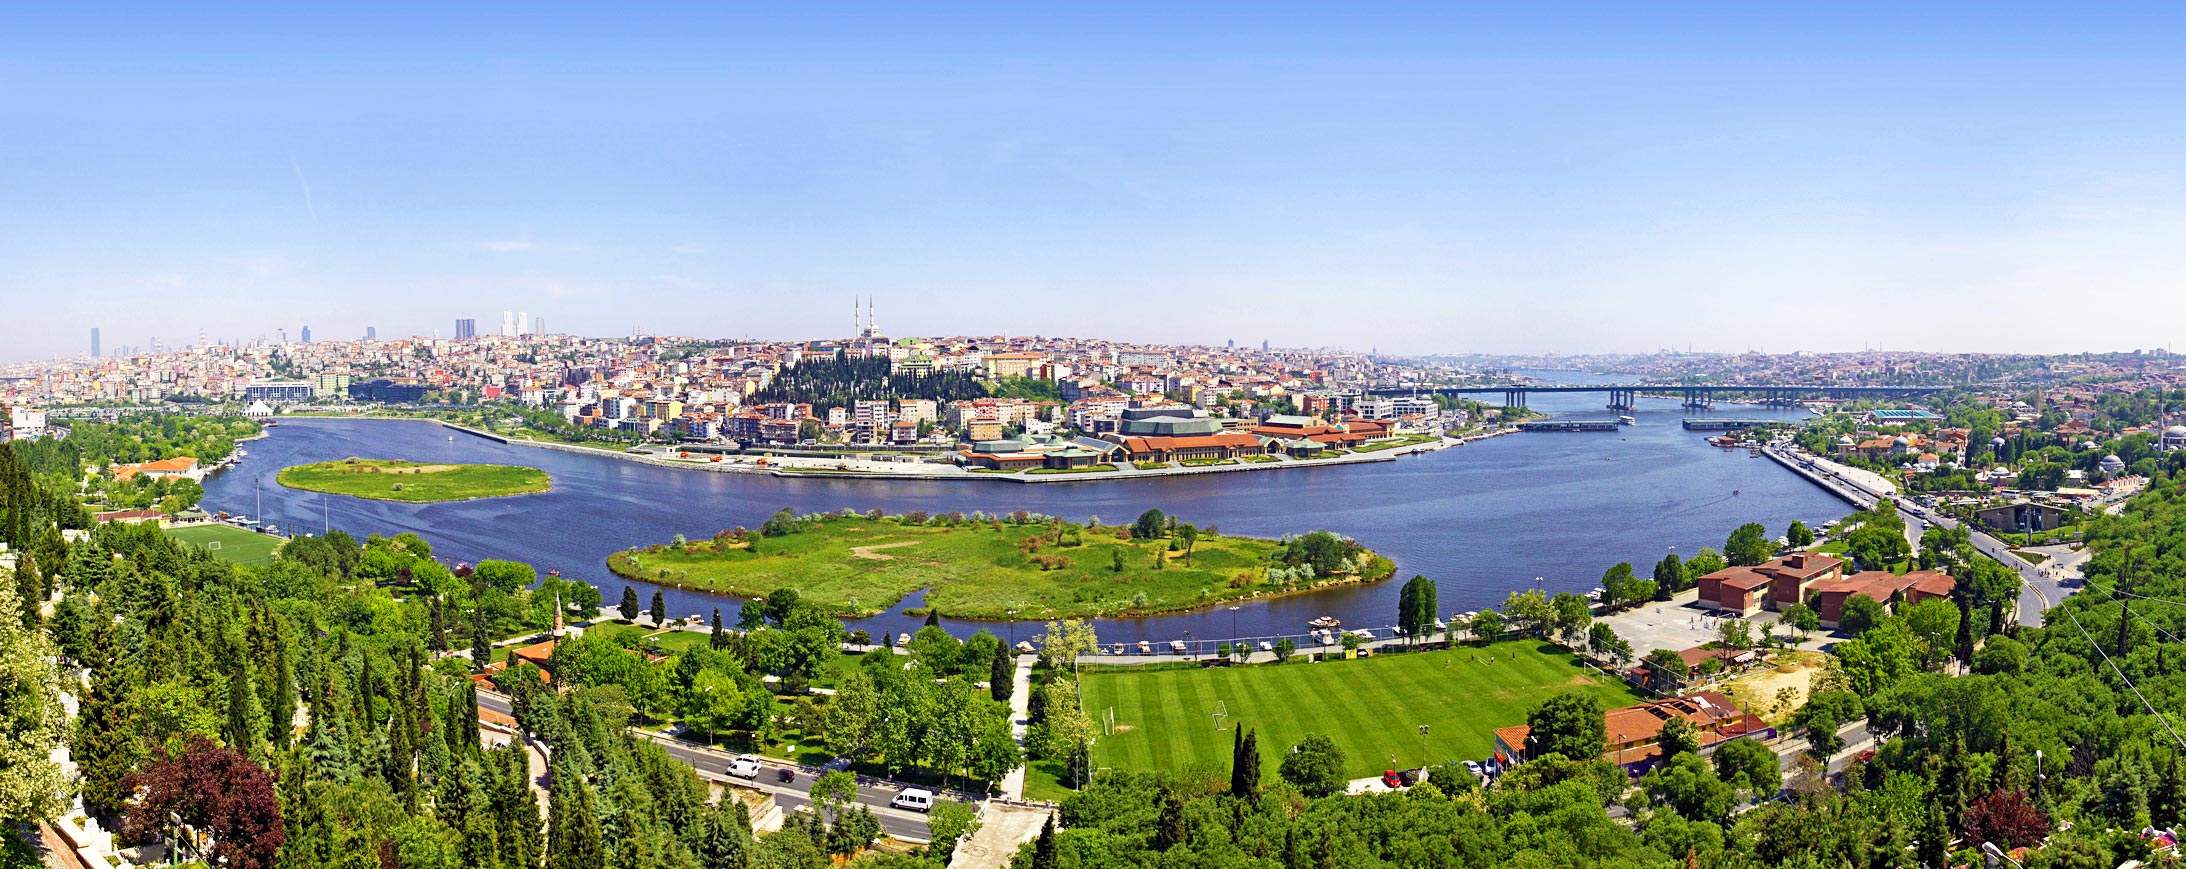 Marmararegion - Bosporus, Istanbul, Goldenes Horn